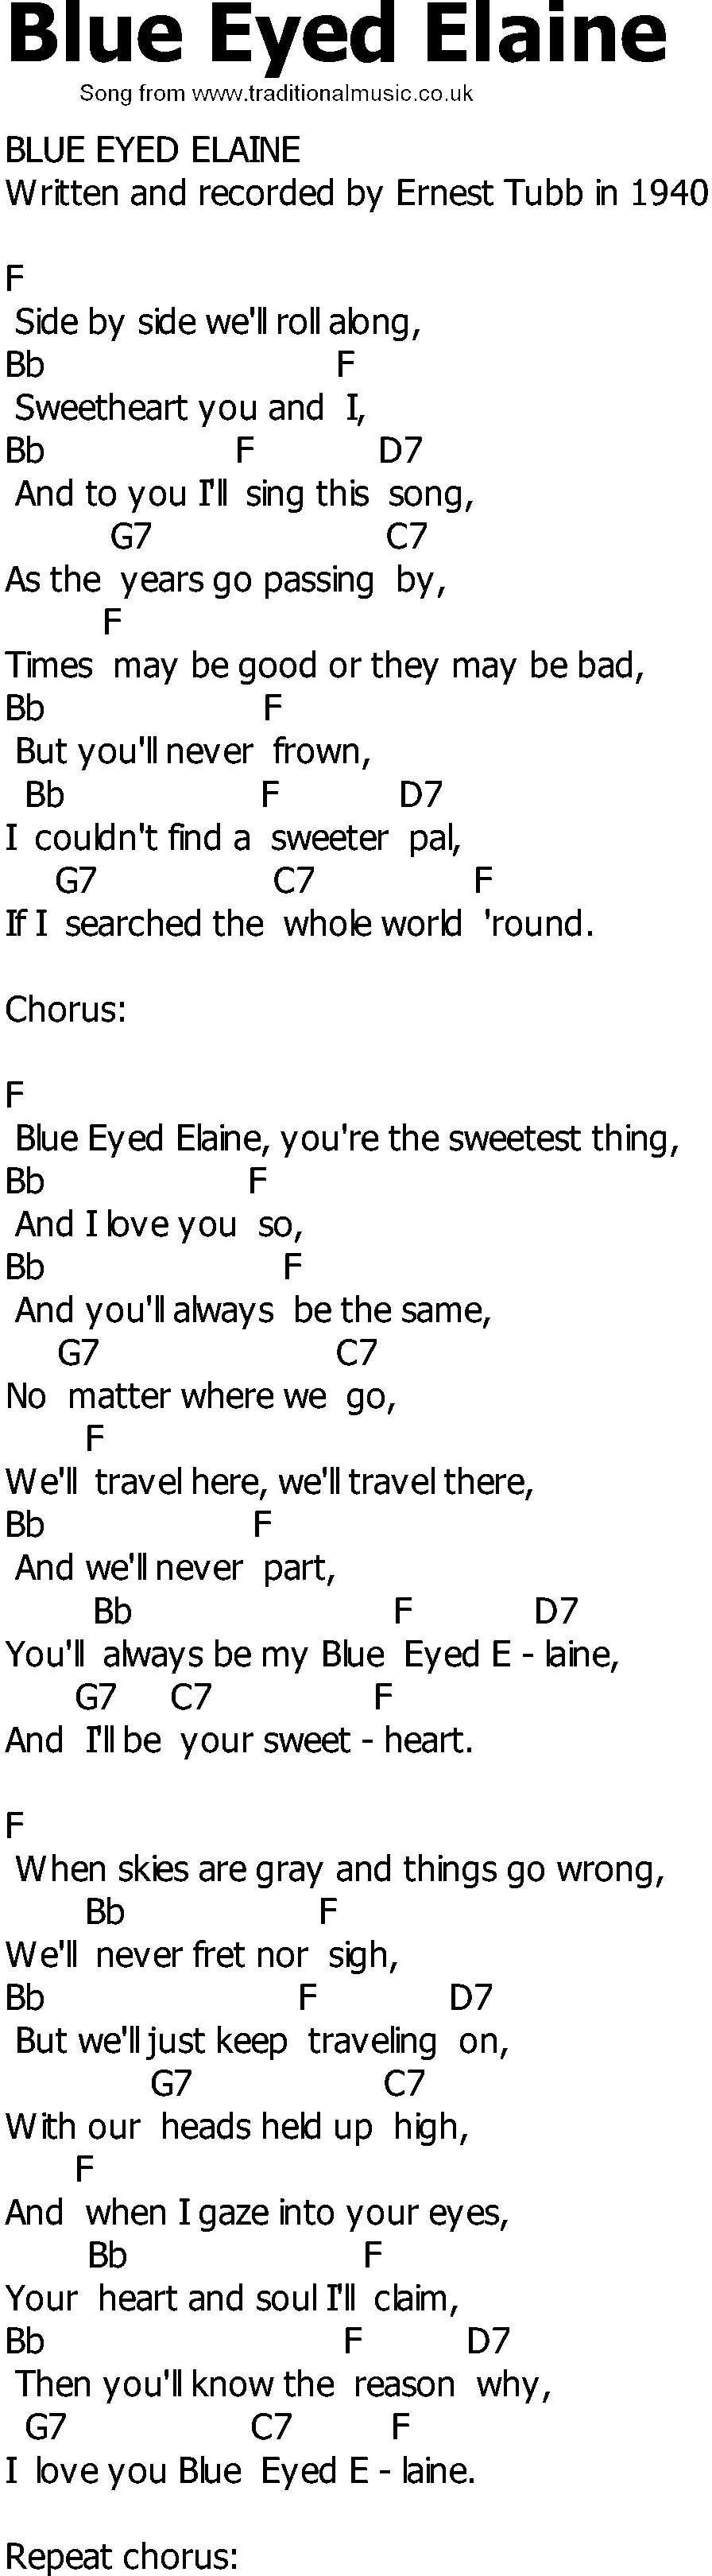 Old Country song lyrics with chords - Blue Eyed Elaine